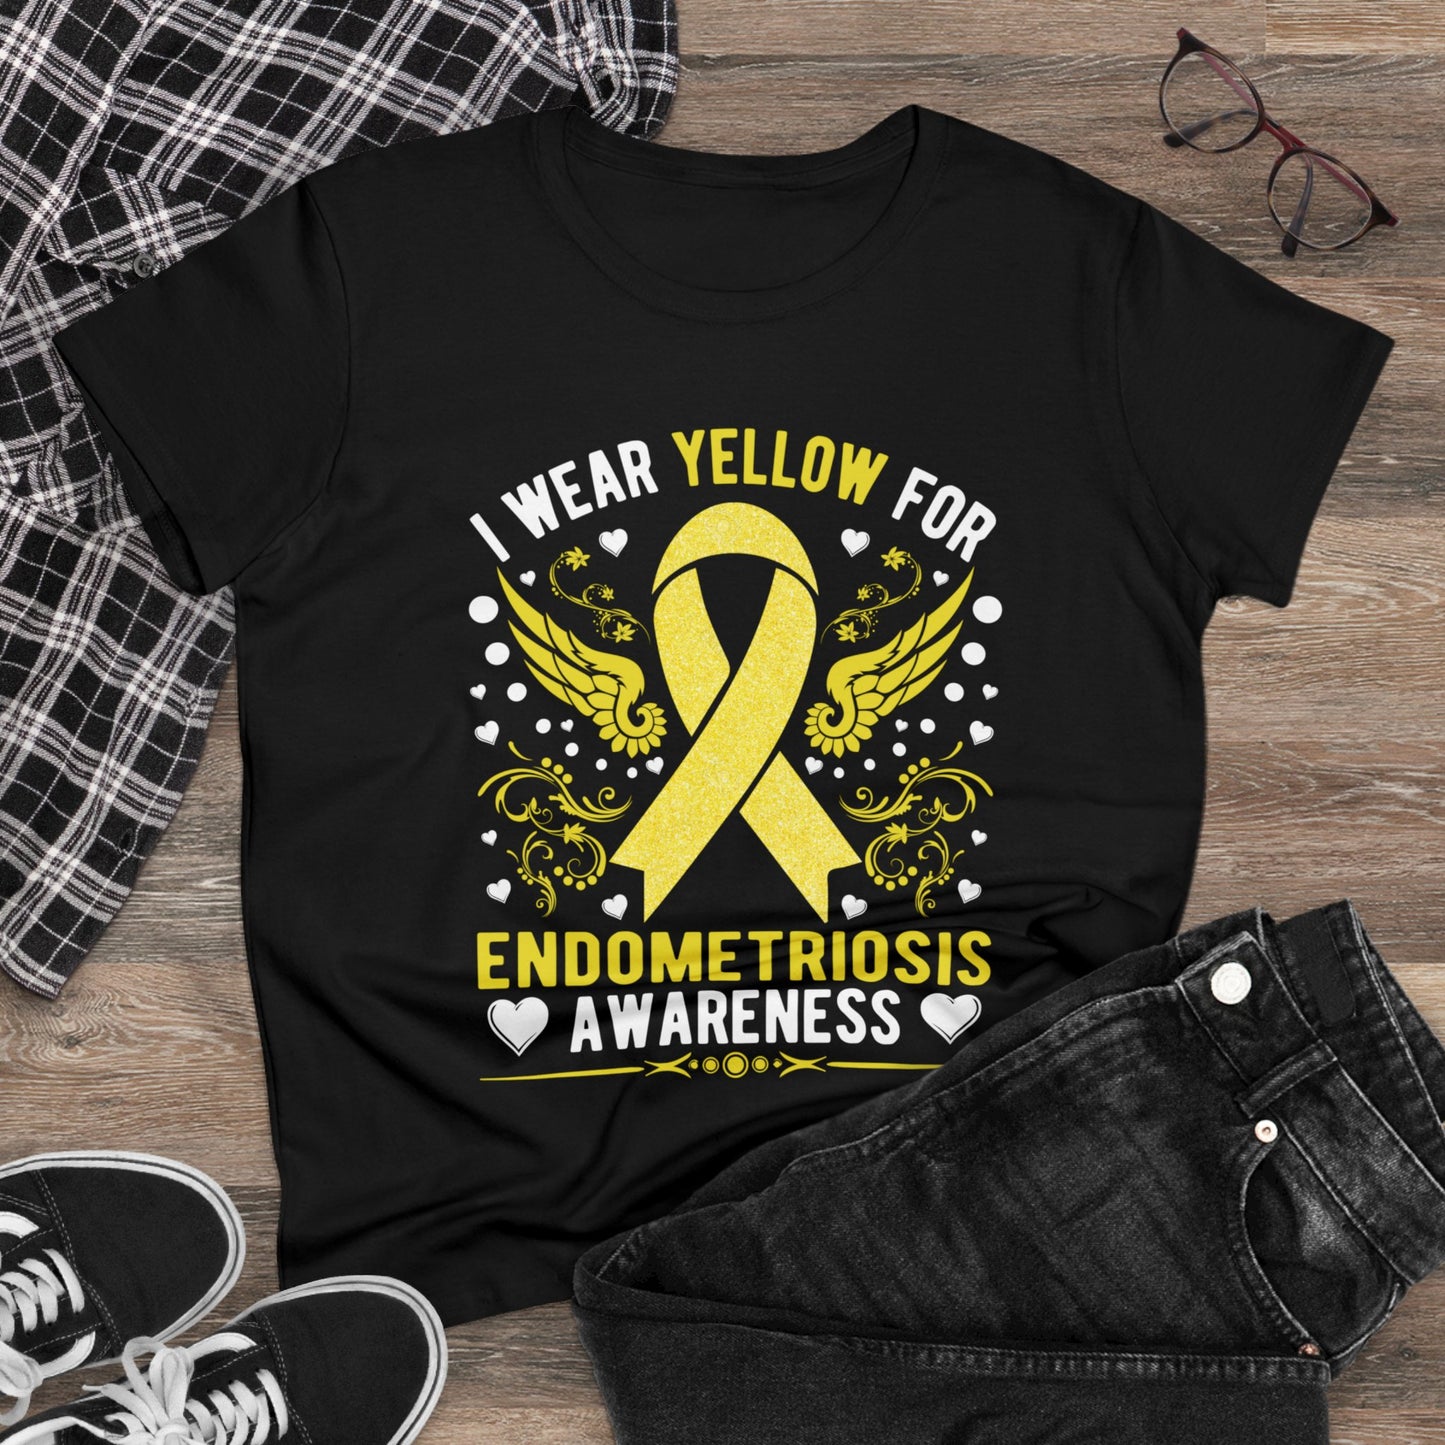 I wear yellow for endometriosis awareness